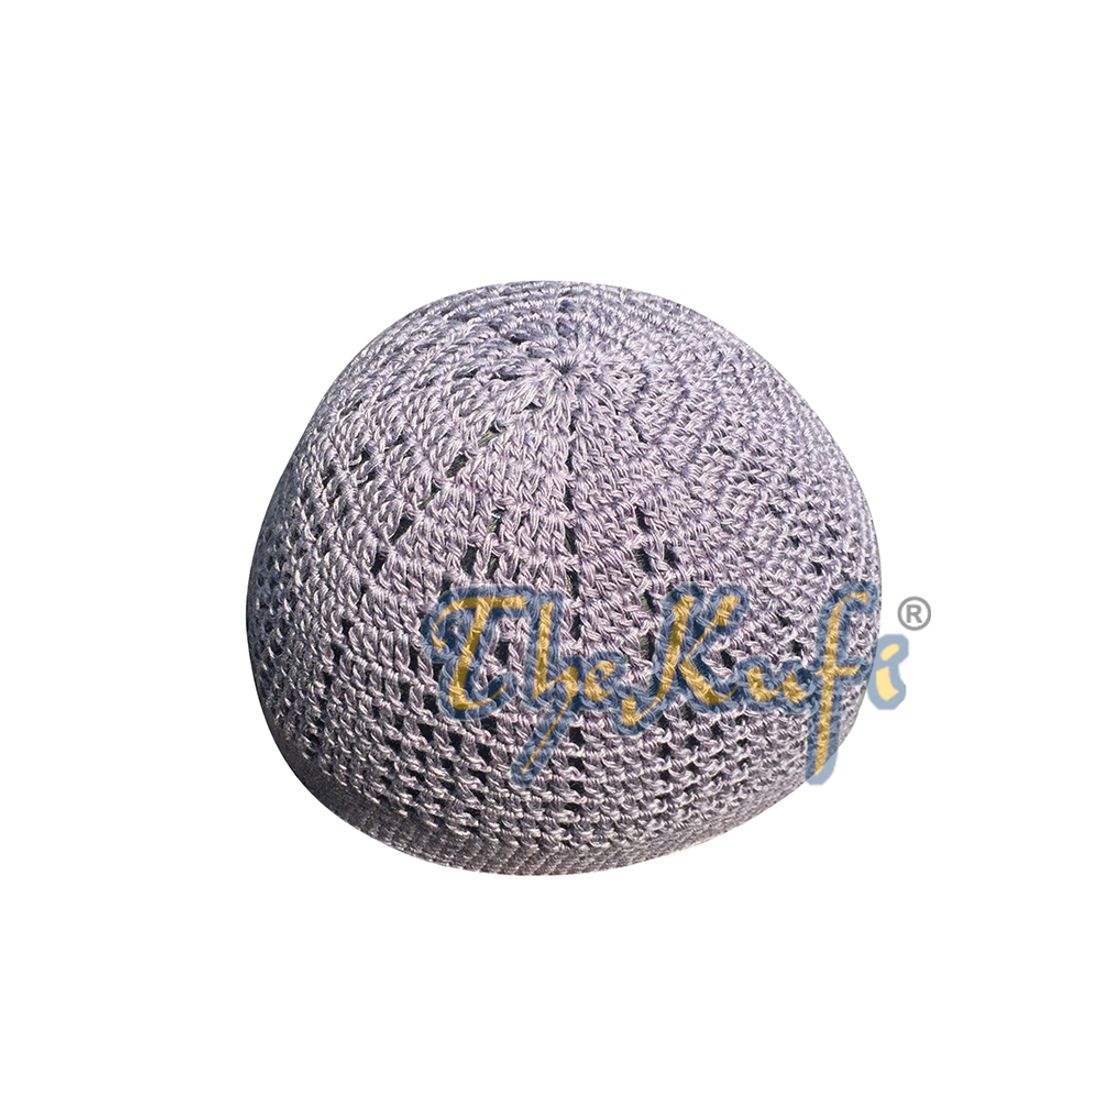 Skull Cap Kufi Cotton Blue Gray Tight & Loose Weave Design Crochet Knit Head Cover